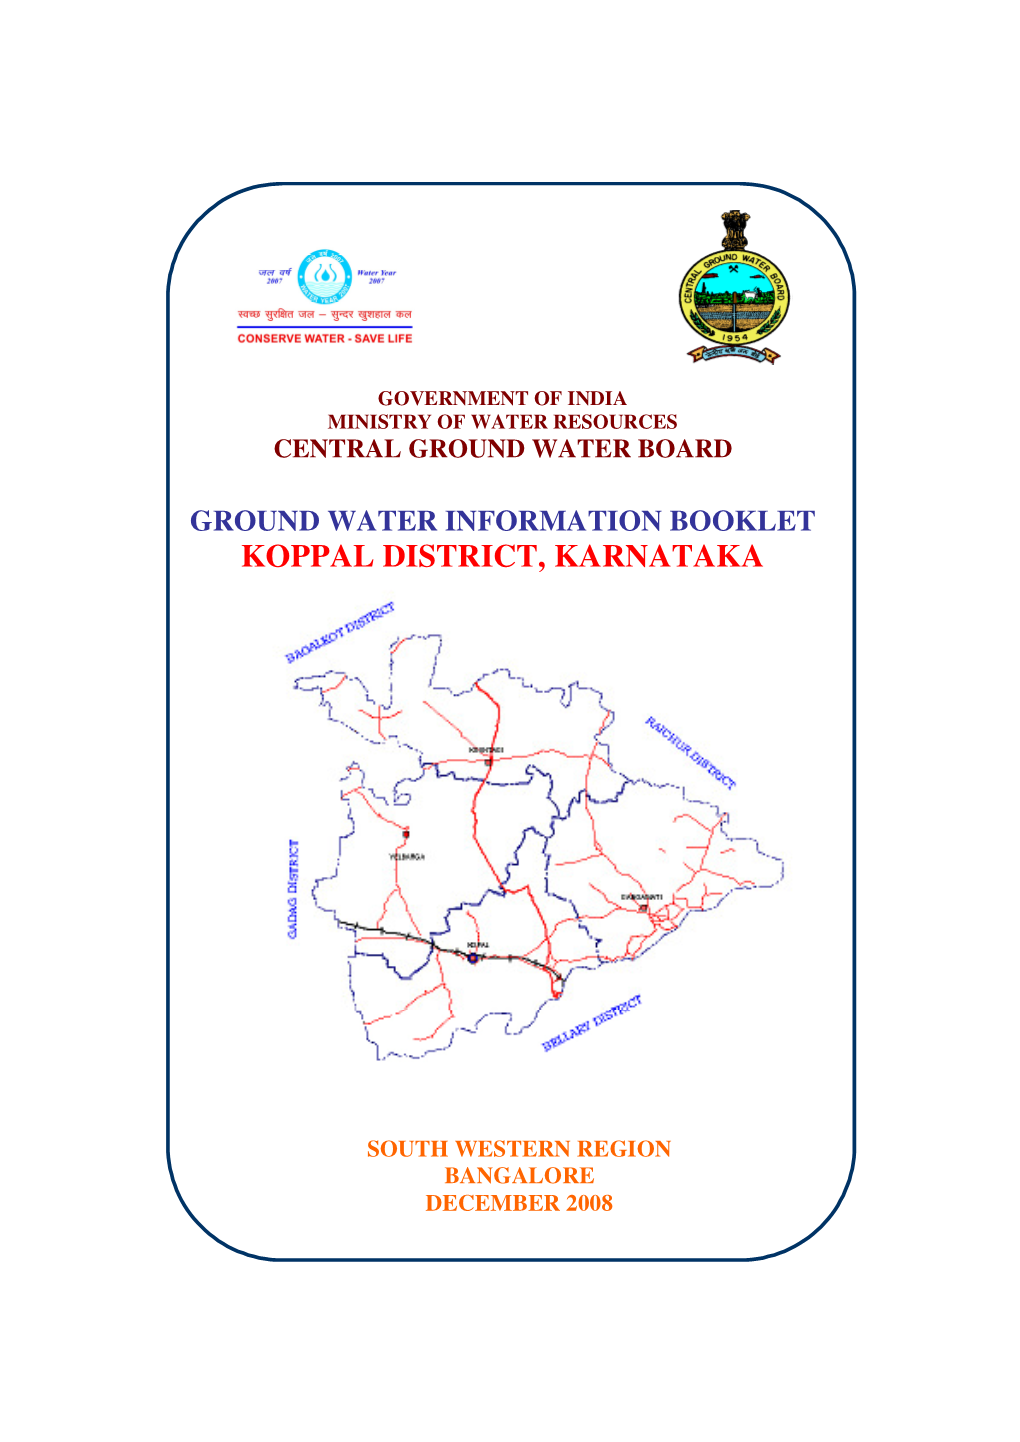 Koppal District, Karnataka